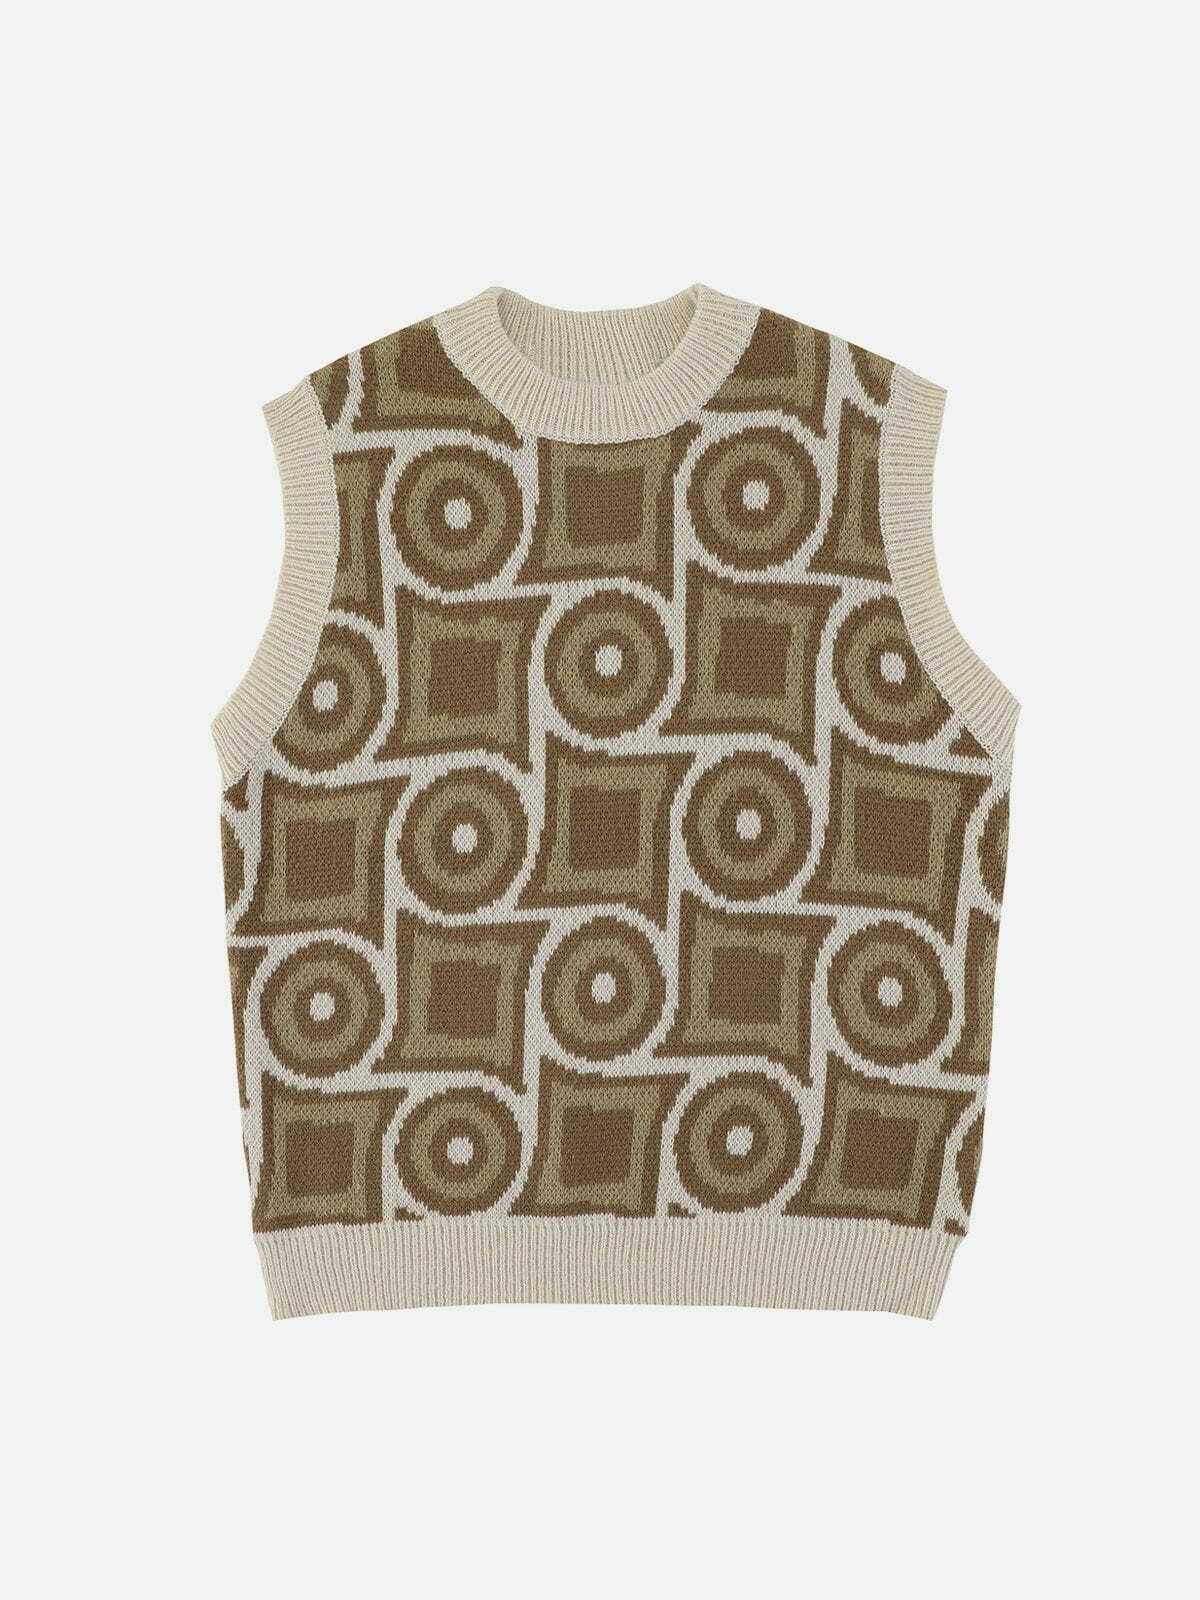 revolutionary geometric sweater vest edgy y2k streetwear essential 2688